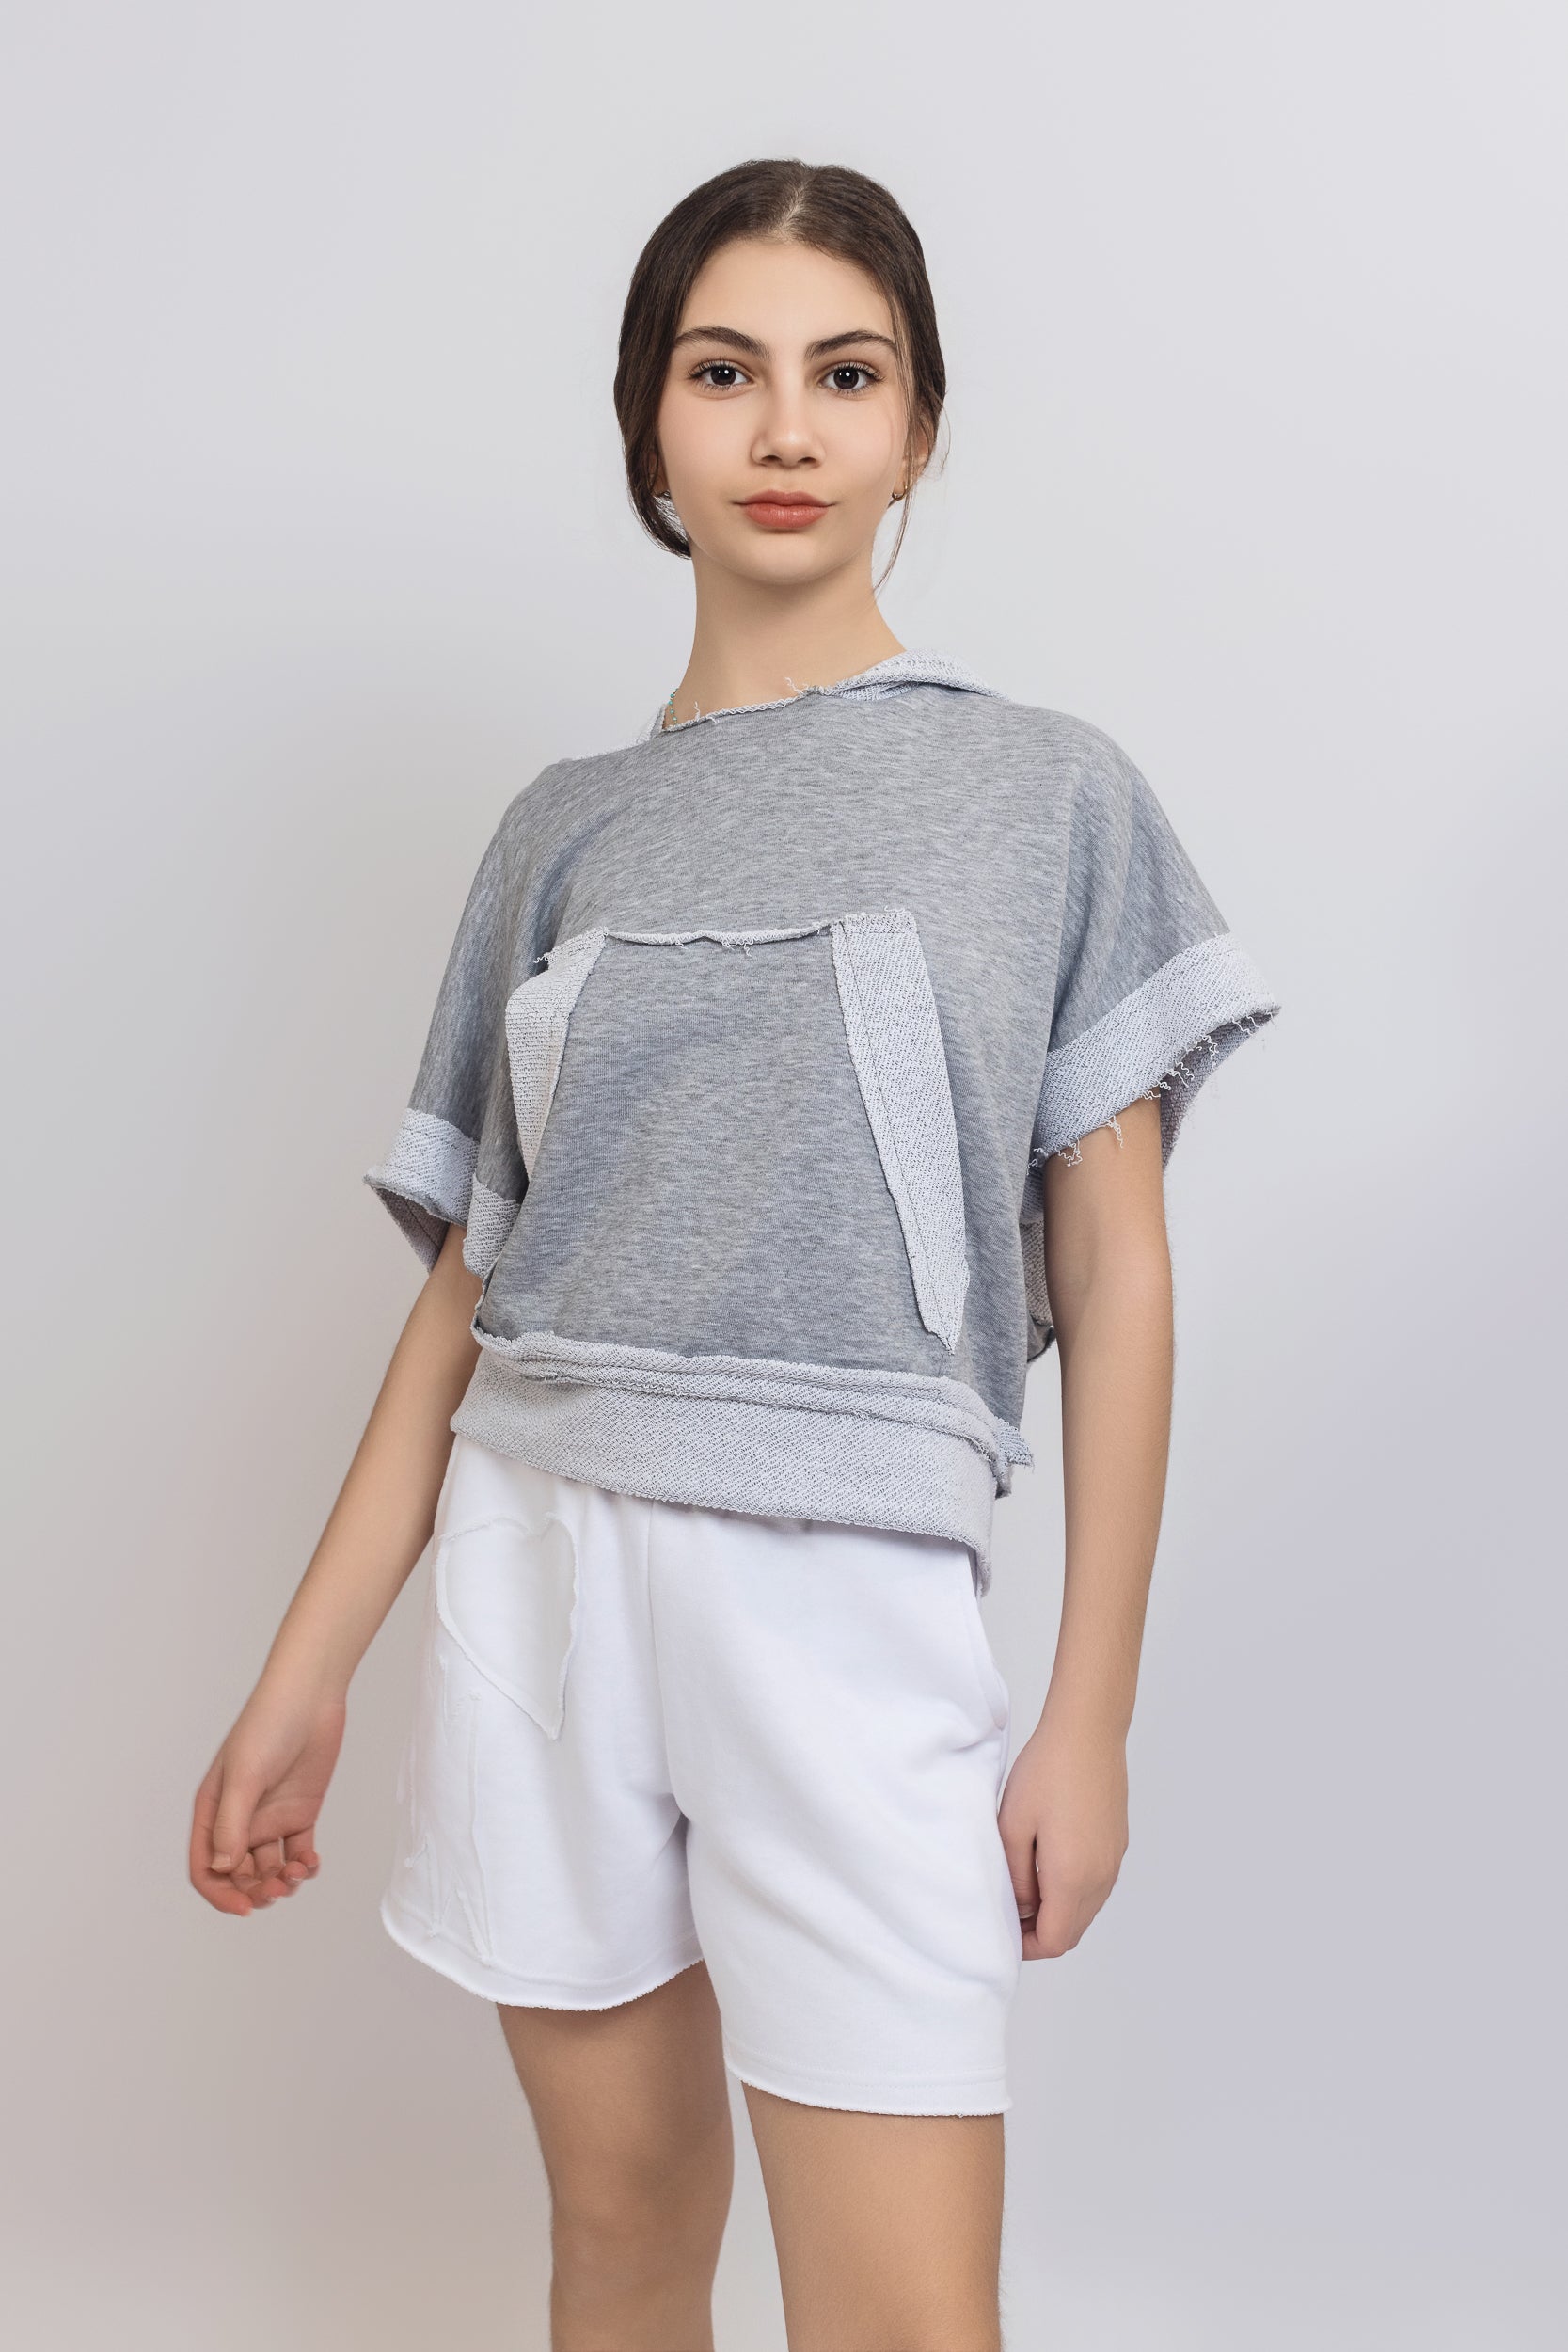 Star hooded sweatshirt For Girls - Grey